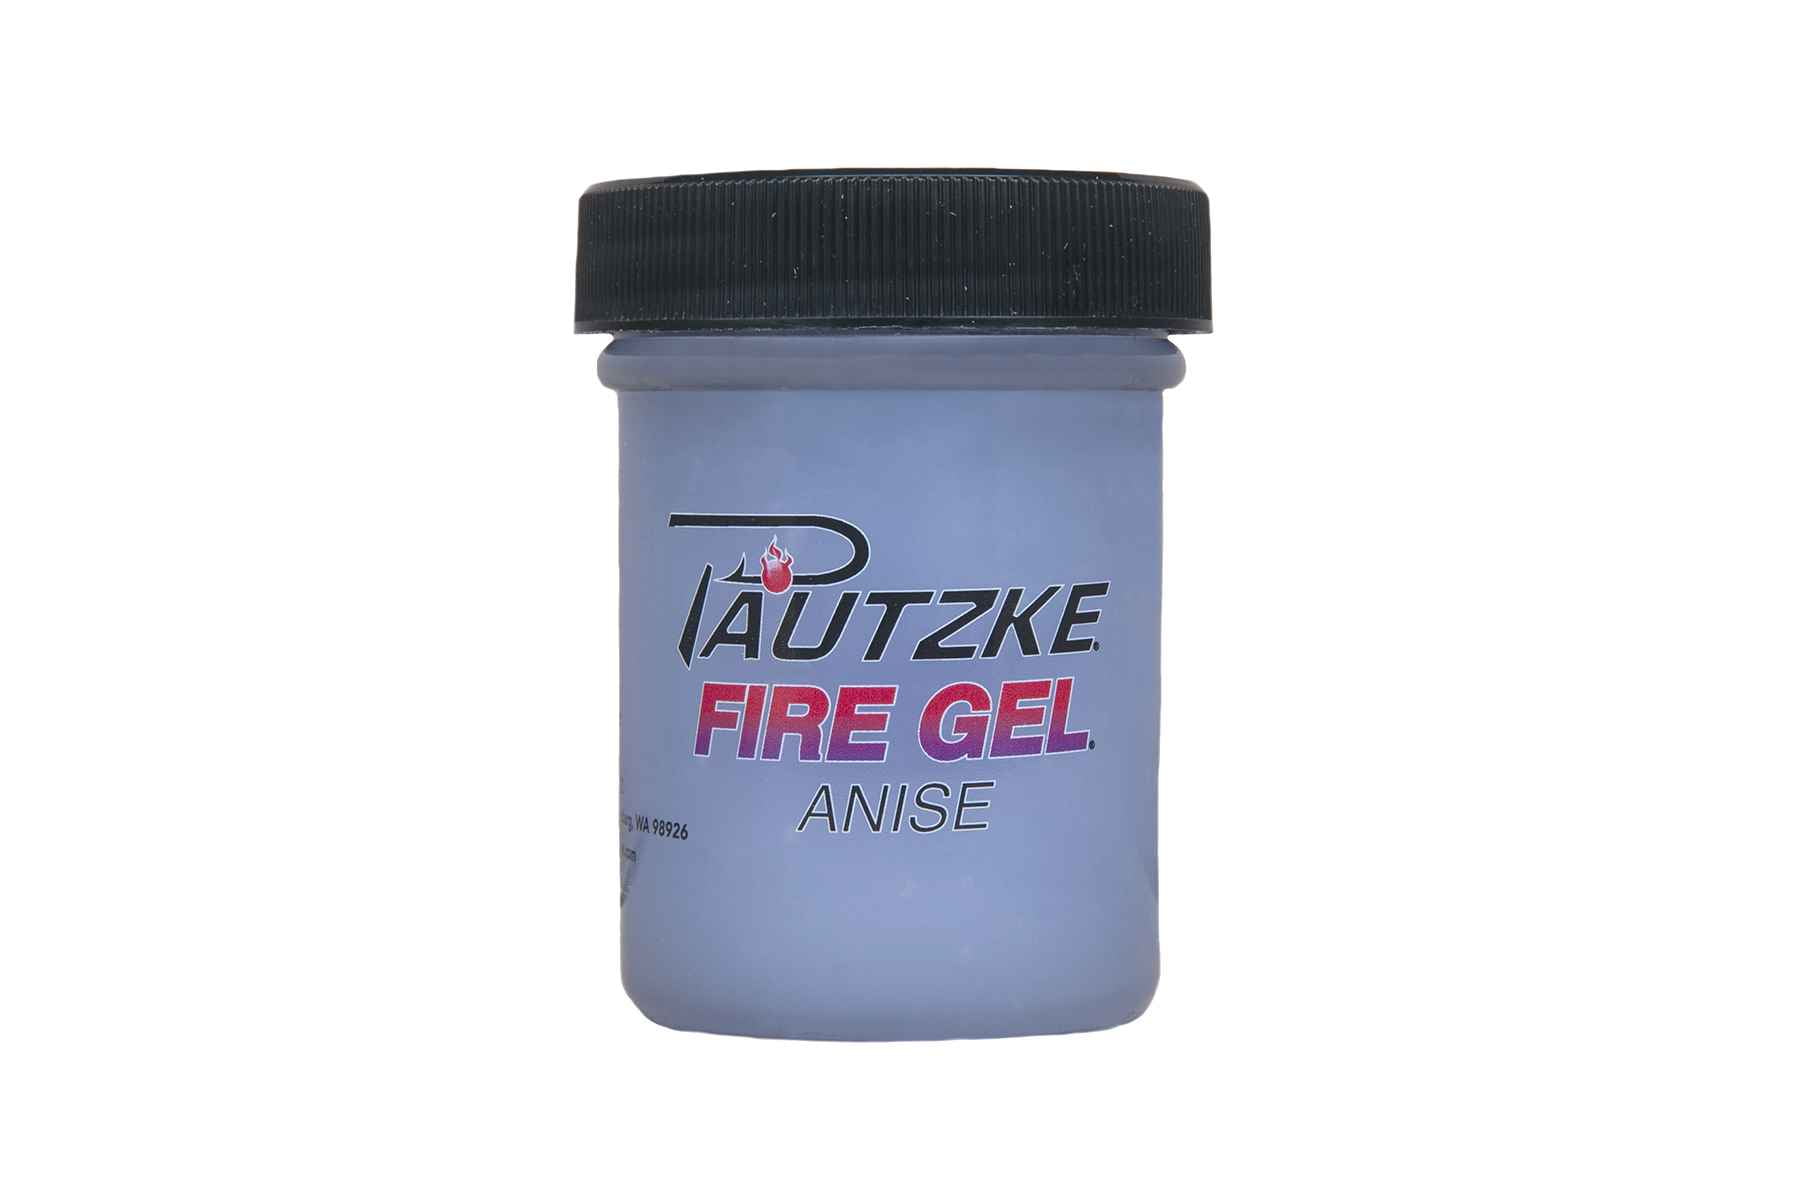 Pautzke Fire Gel Attractant 1.65oz. (Anise)